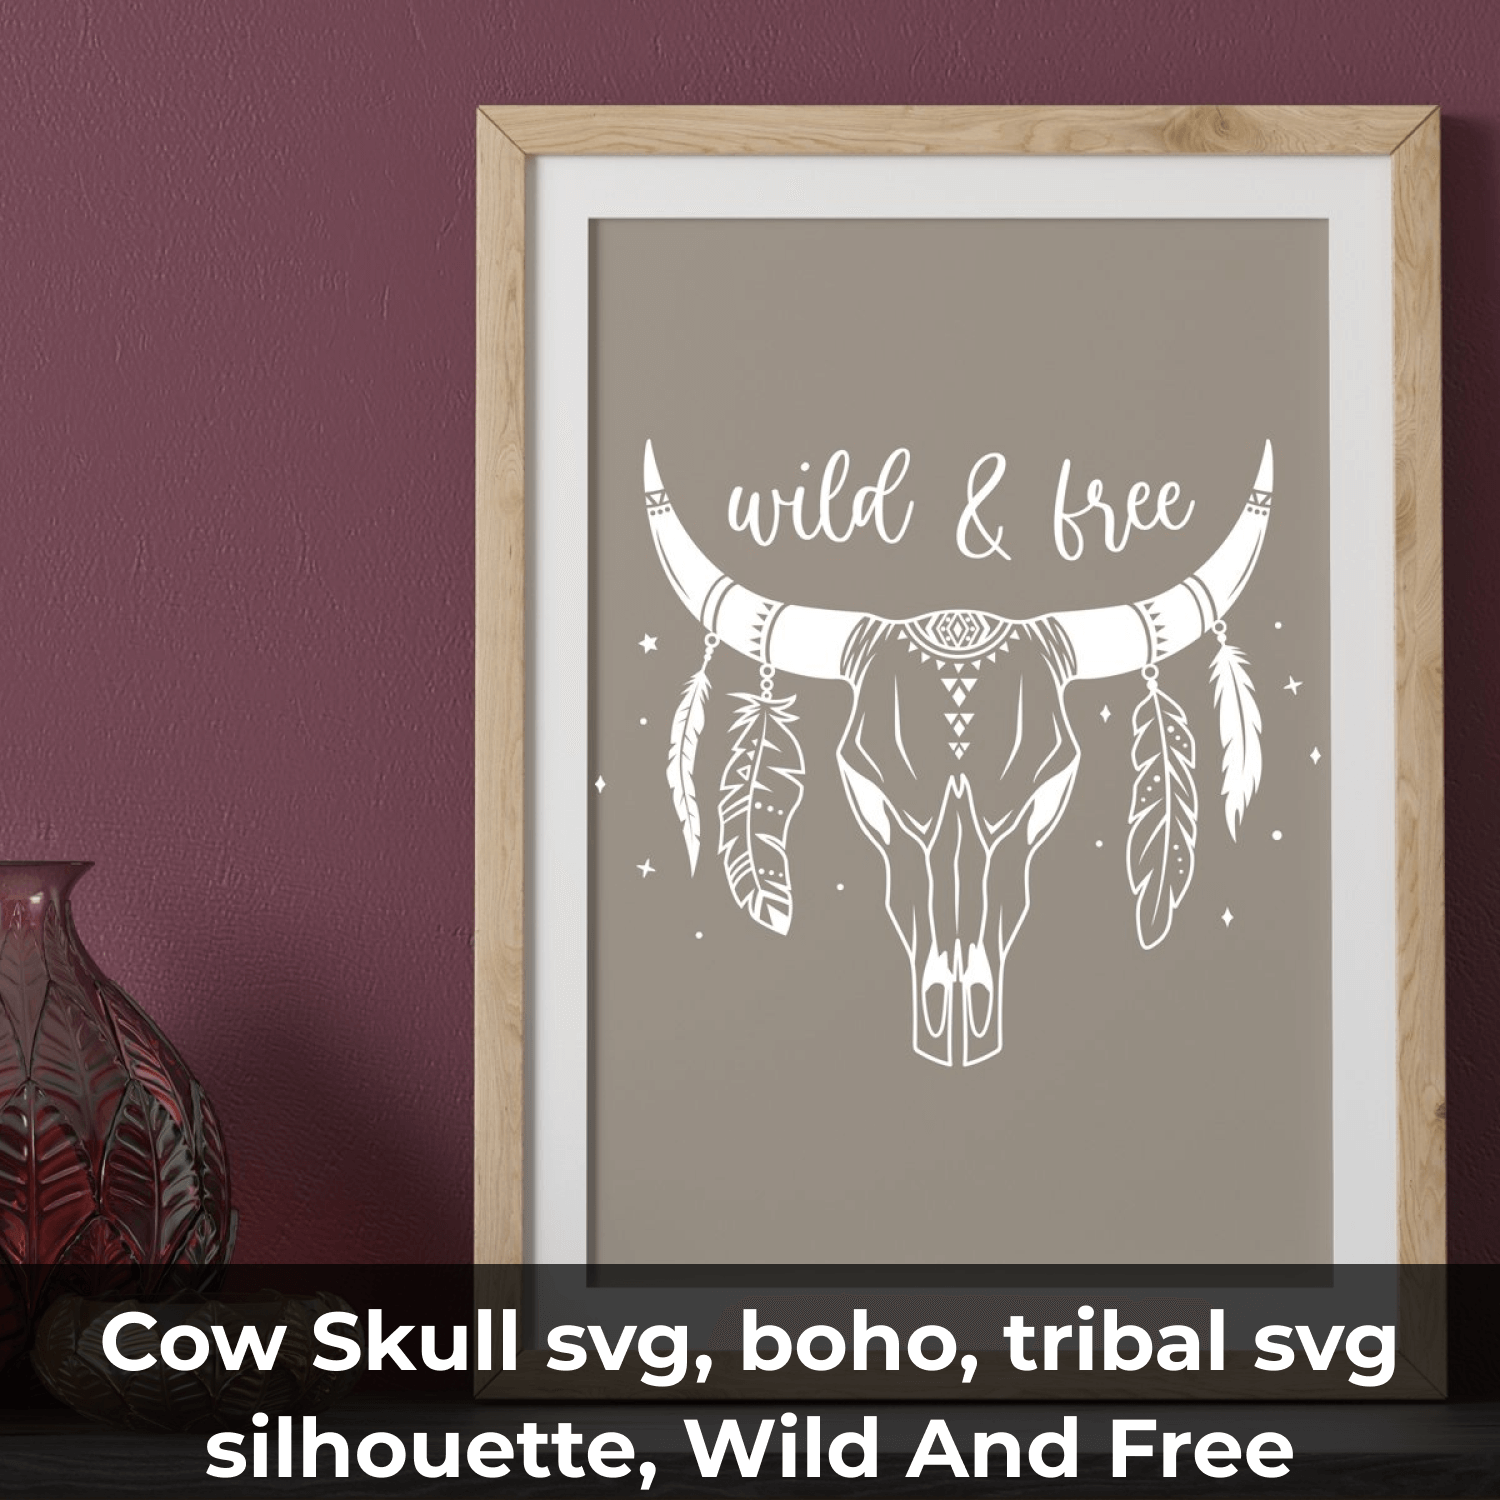 Wild real spirit skull cow.